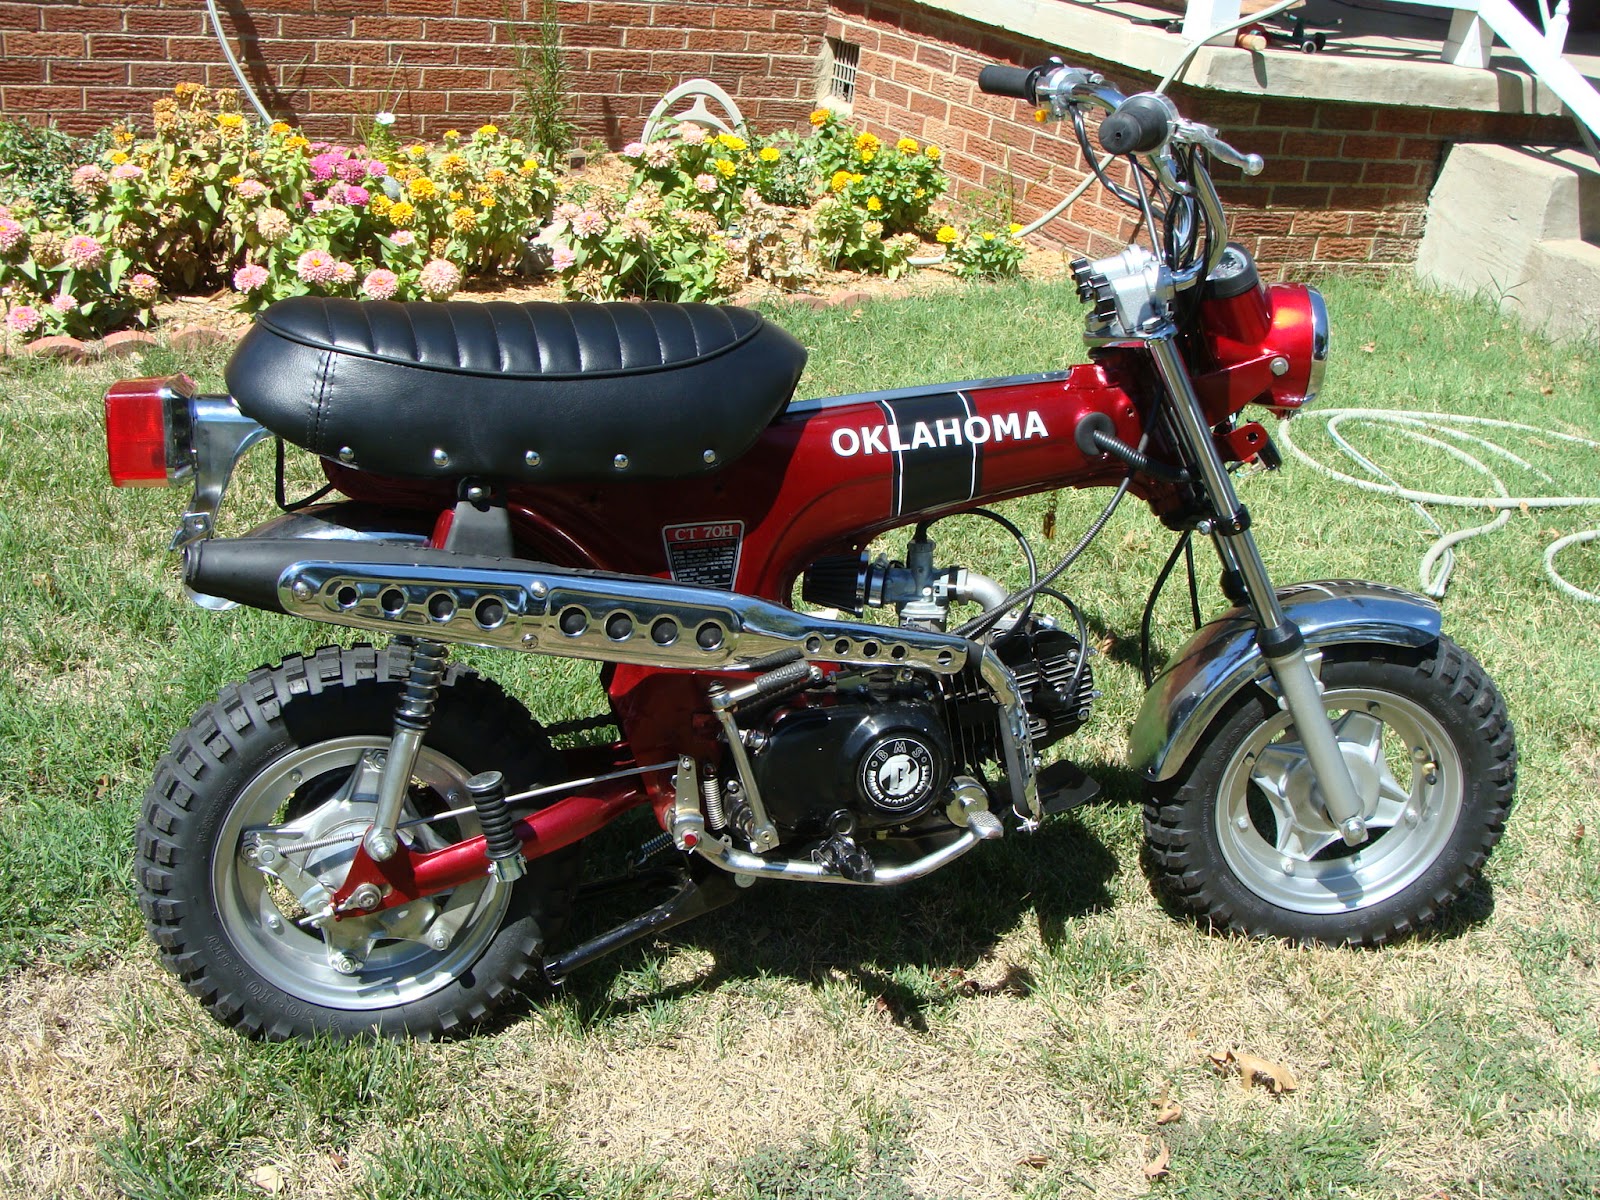 Tulsa Retro Honda. Classic Motorcycles and Scooters: Honda CT70 ...